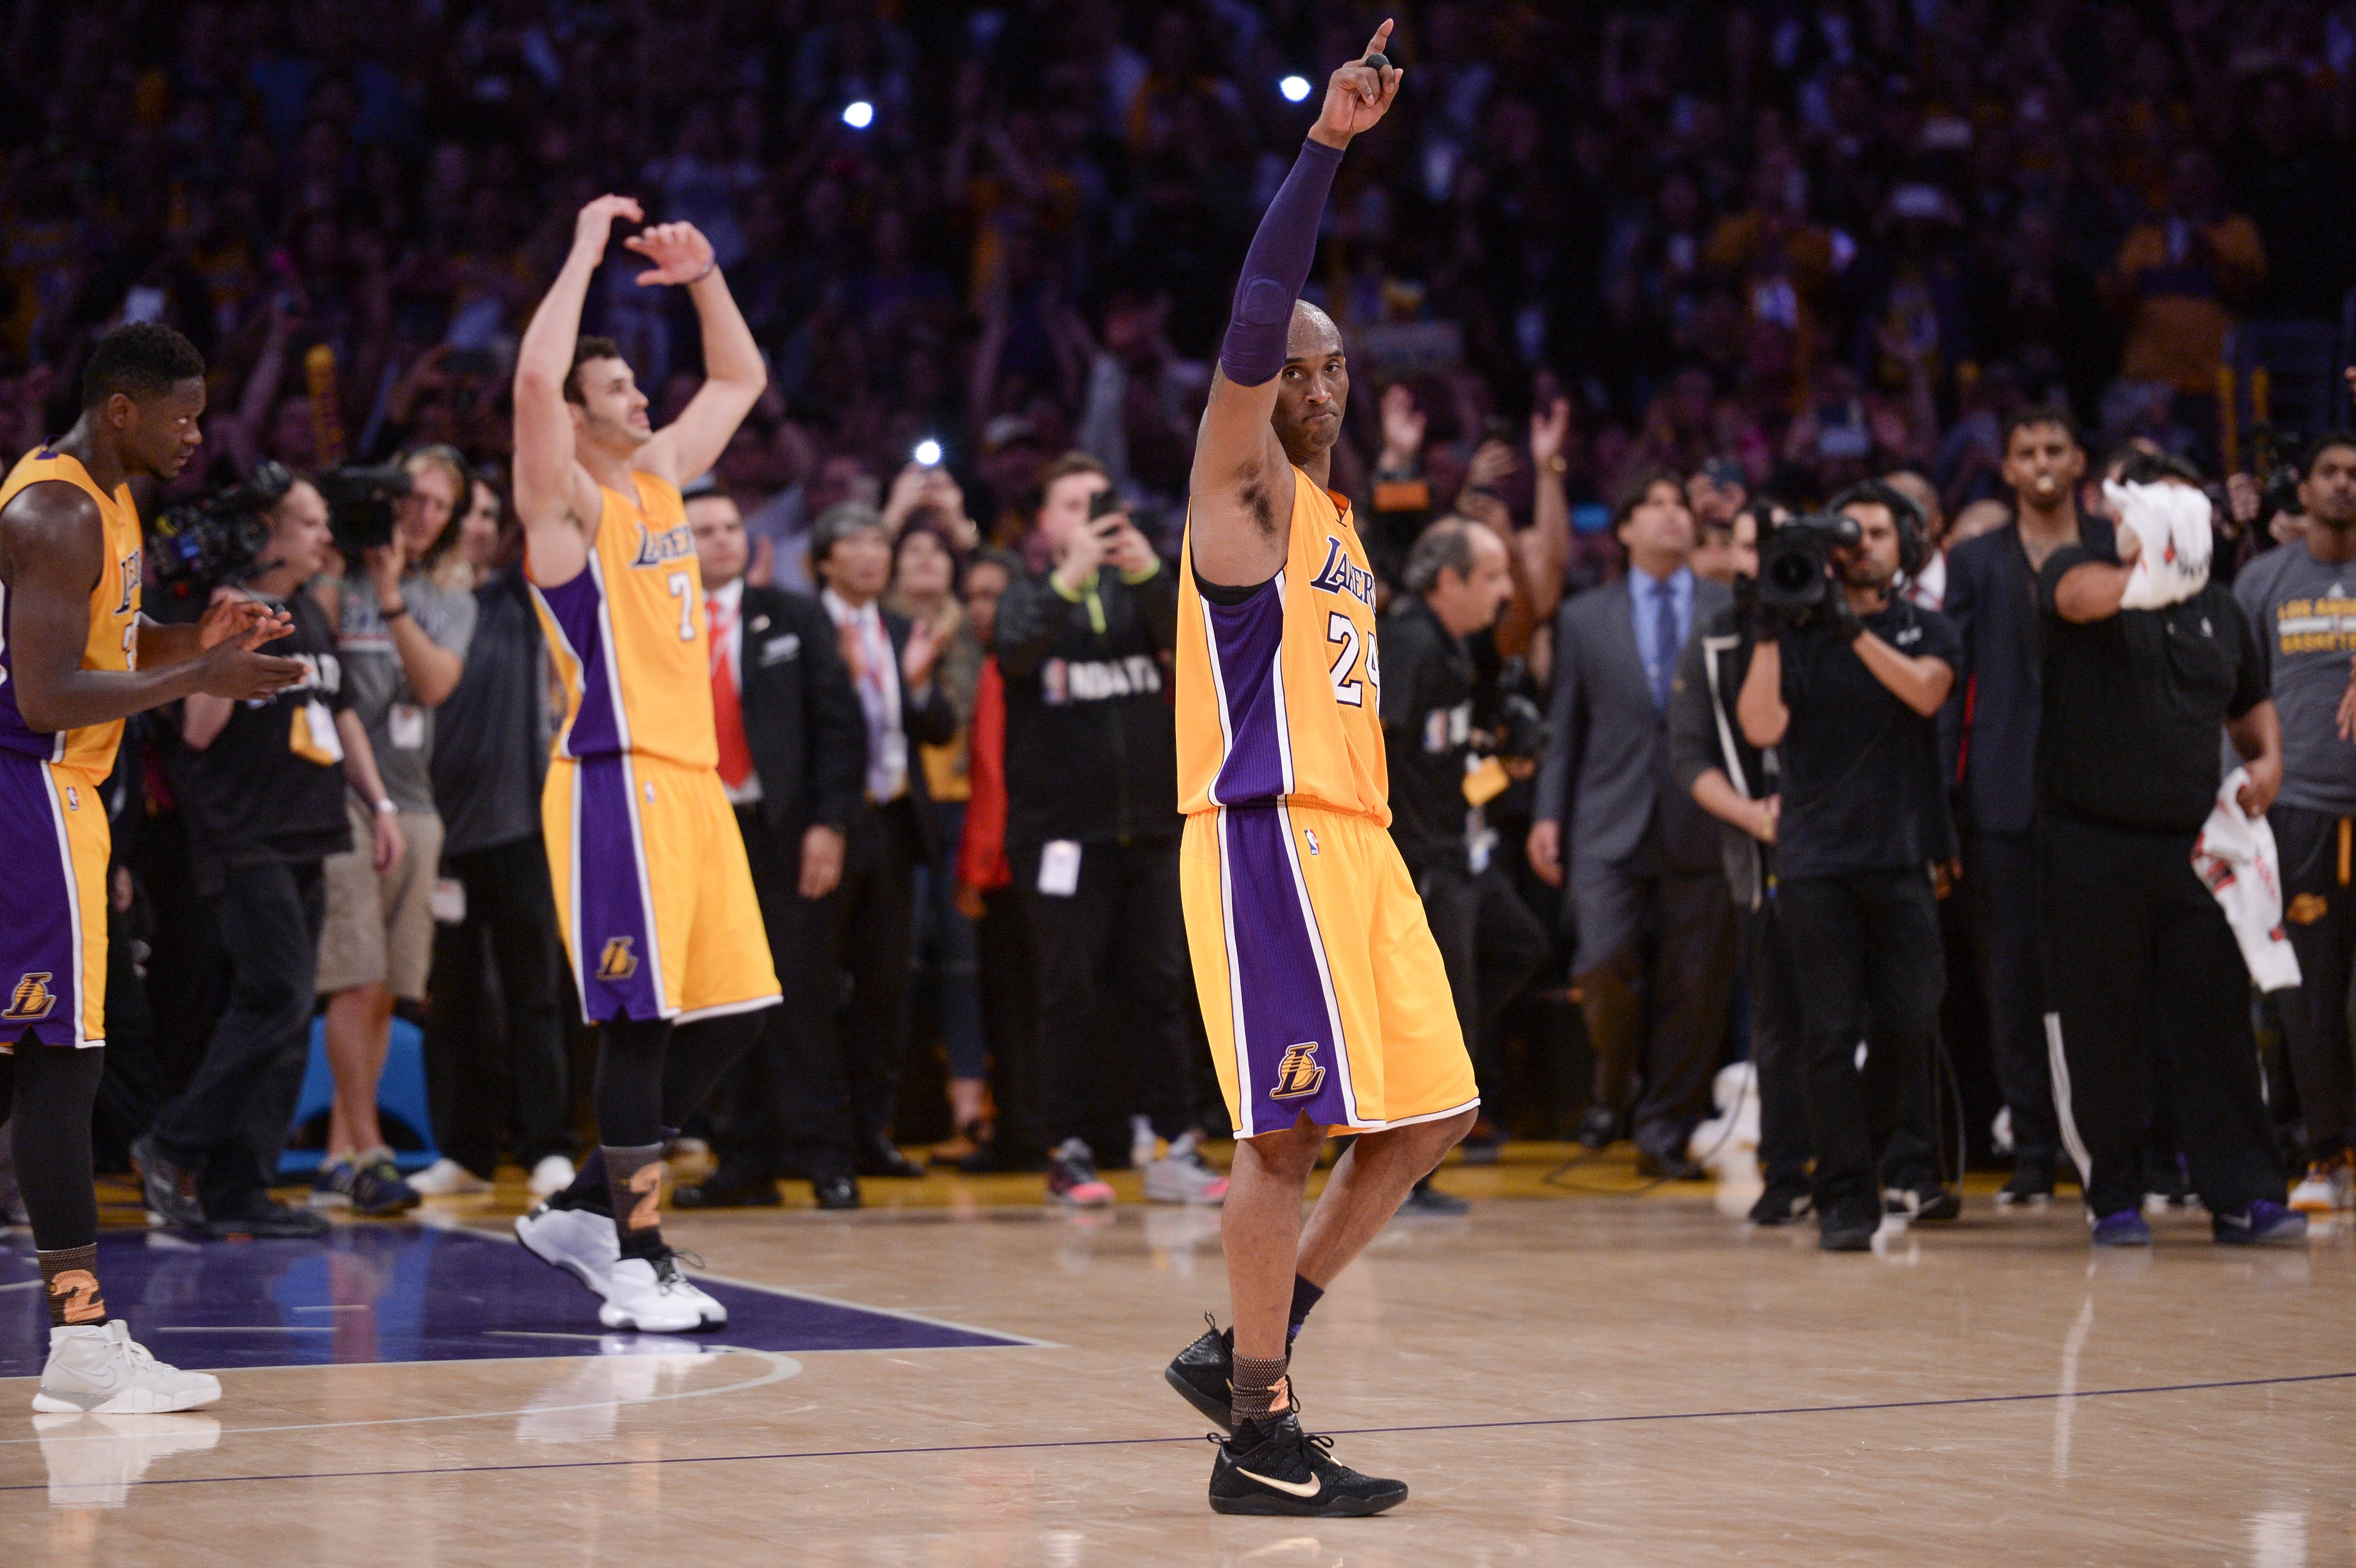 Kobe: The Last Game